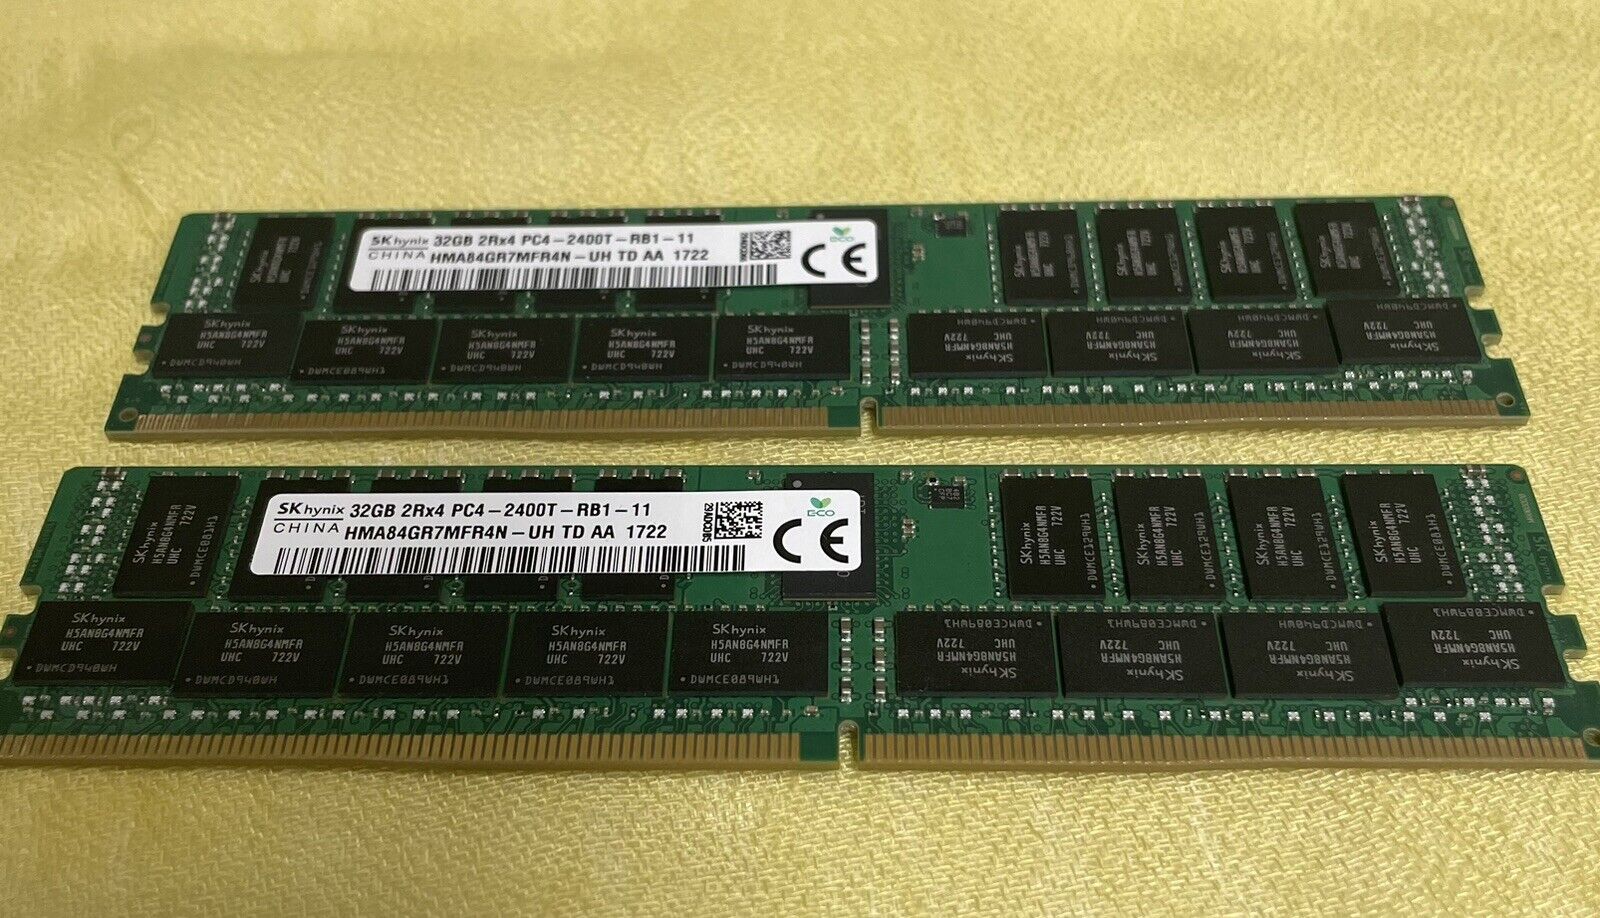 sk hynix (2x32gb) Memory(RAM) Sticks